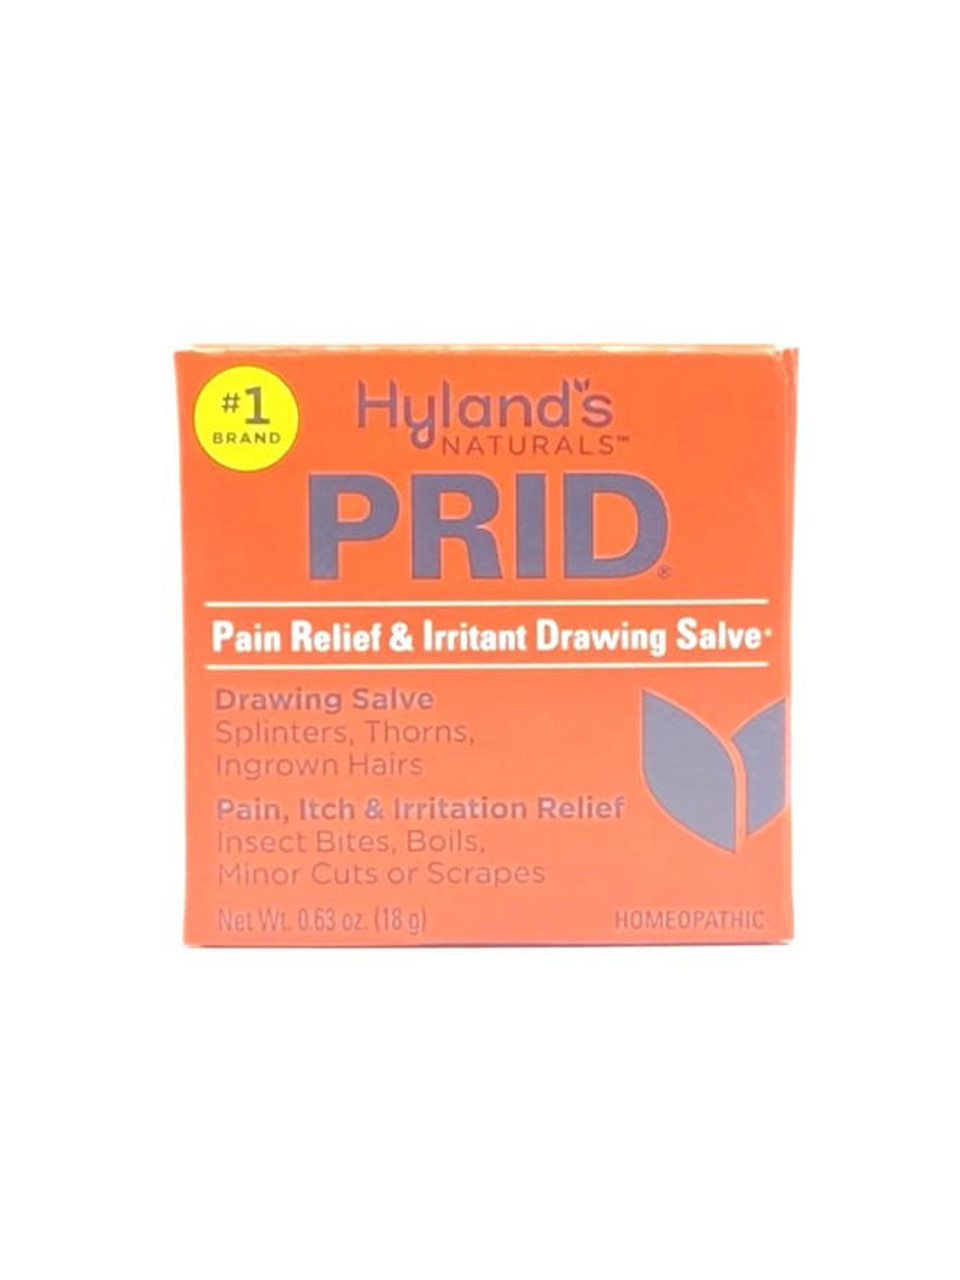 Prid, Pain Relief & Irritant Drawing Salve, 0.63 oz (18 g)